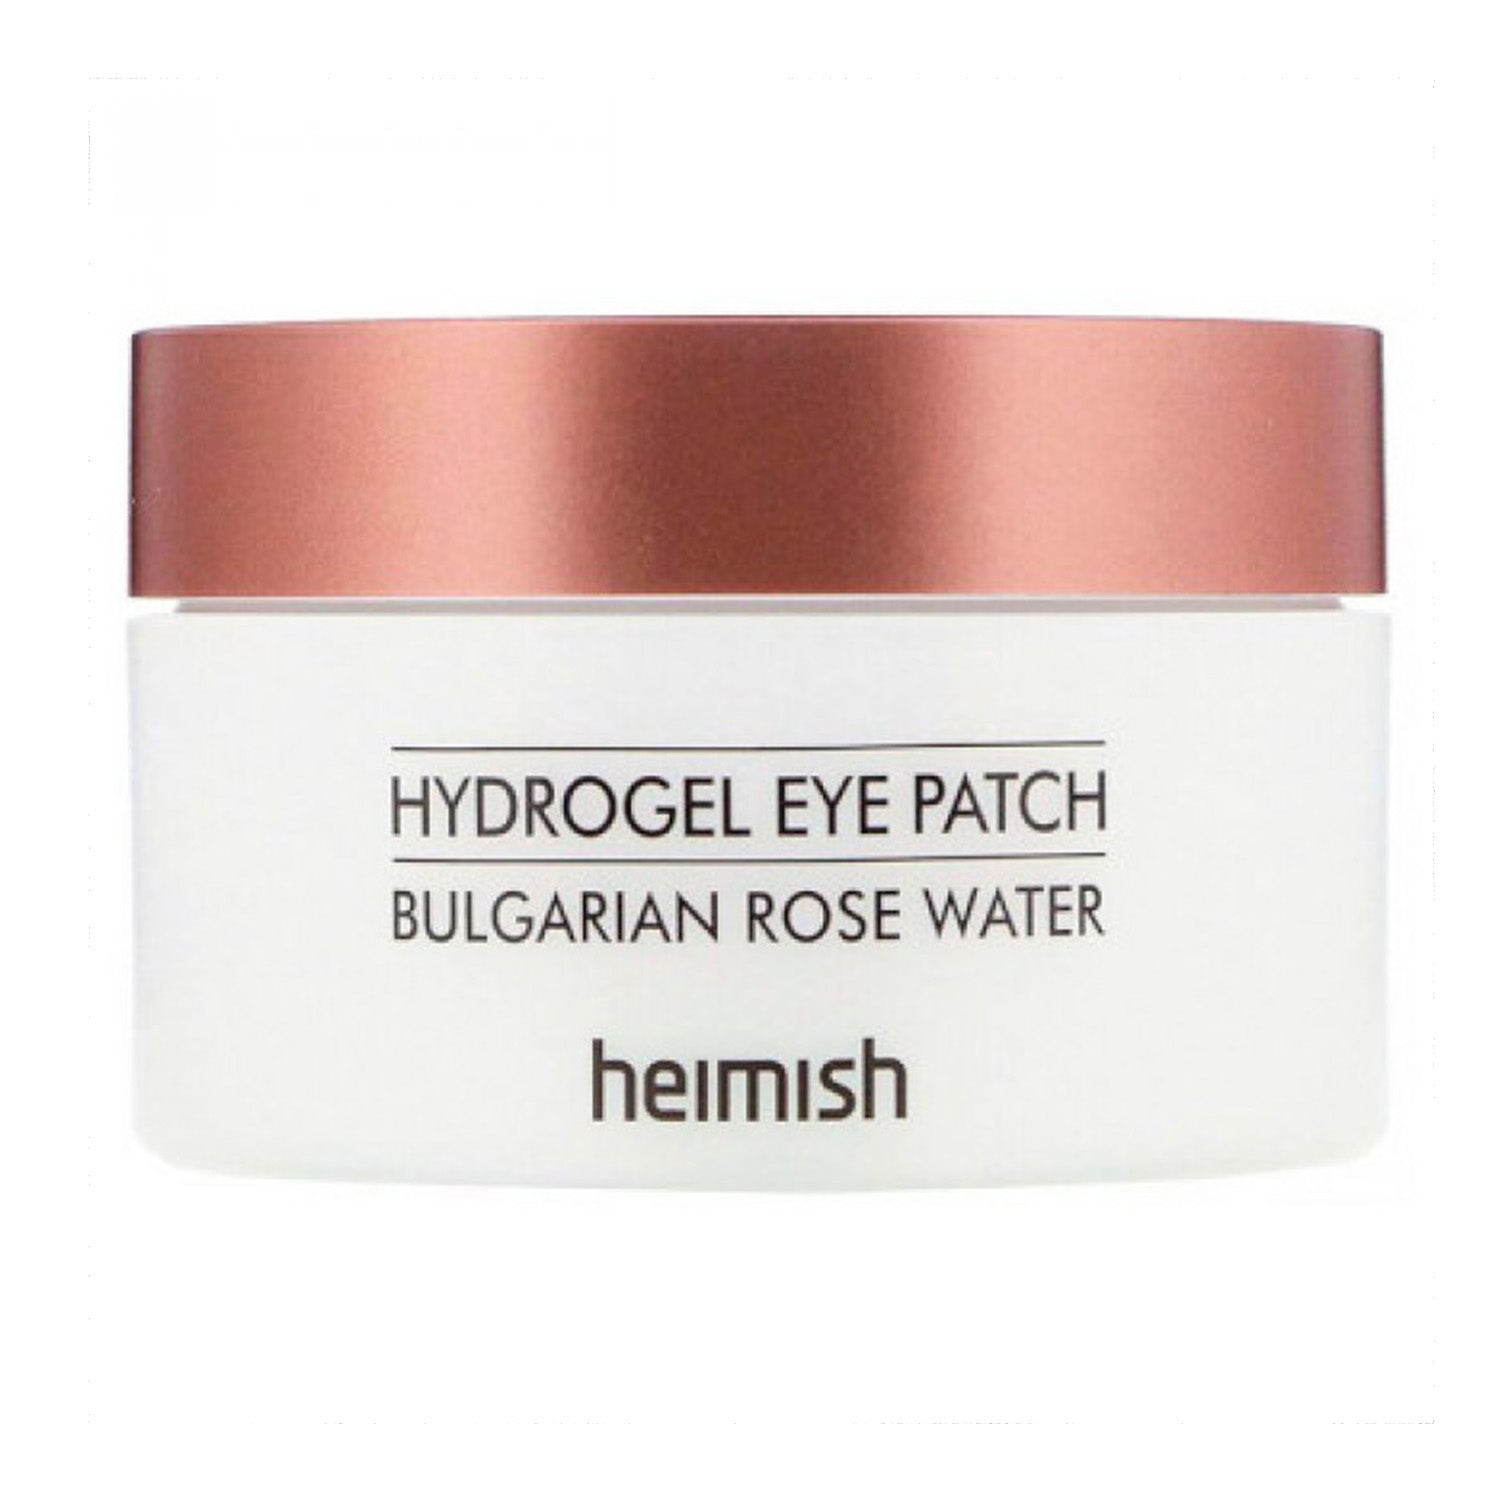 Heimish Bulgarian Rose Water Hydrogel Eye Patch is rich in Bulgarian Rose Water, delivering hydration and nourishment.